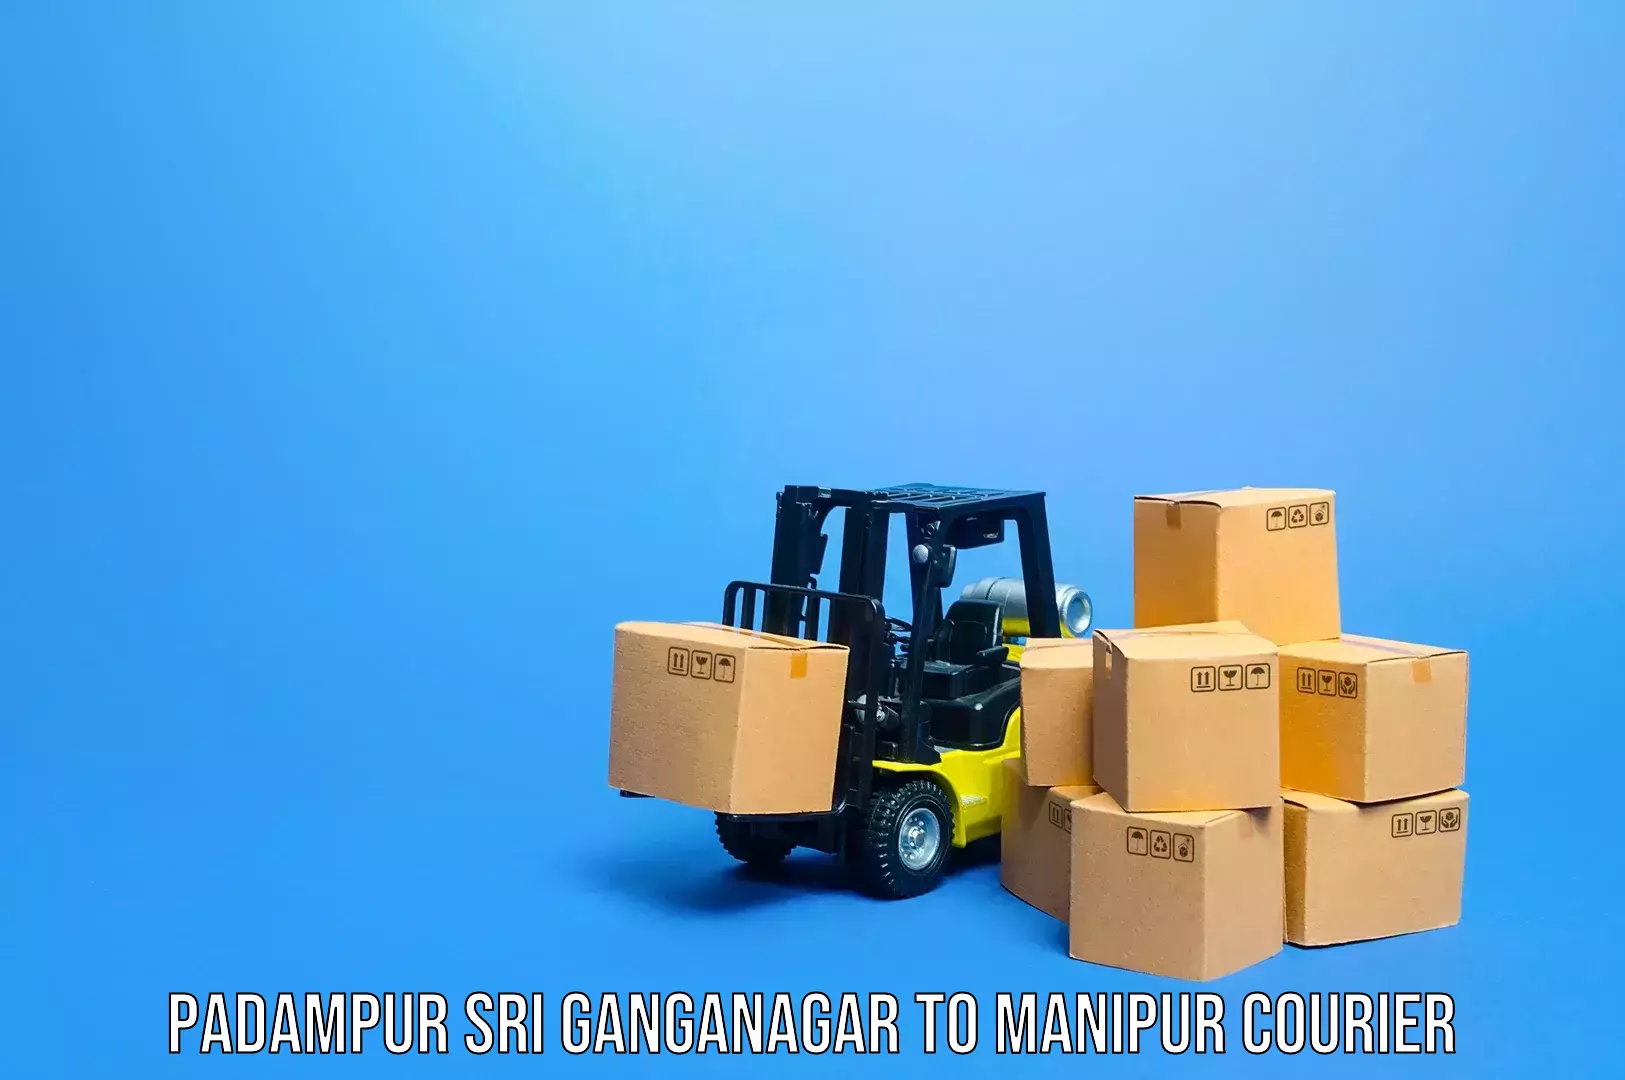 Luggage delivery network Padampur Sri Ganganagar to Jiribam